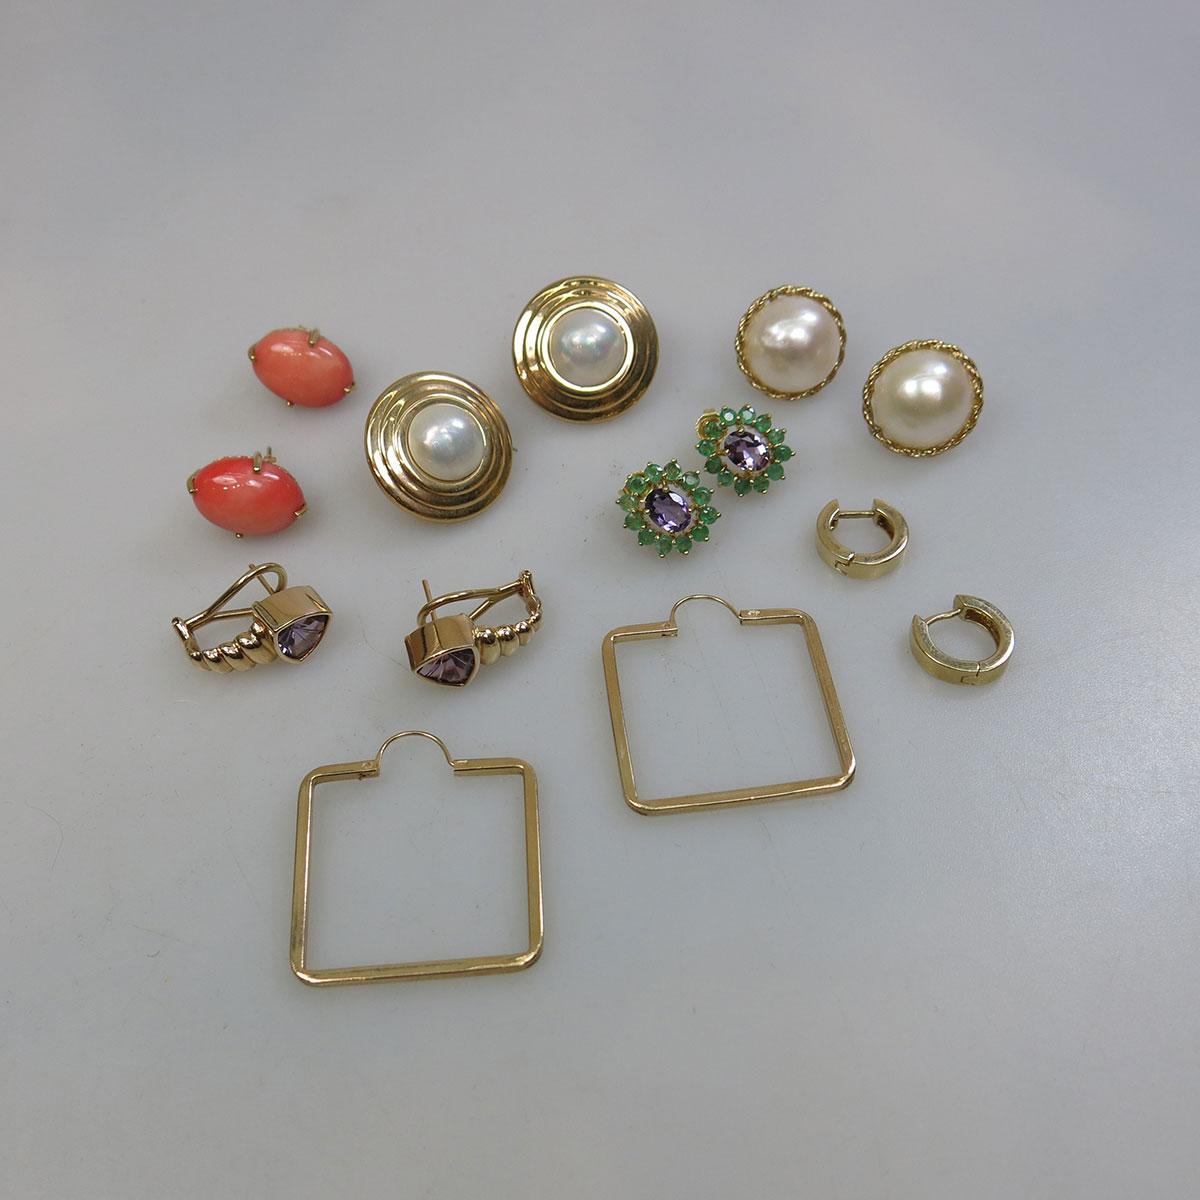 7 Pairs Of Various Gold Earrings